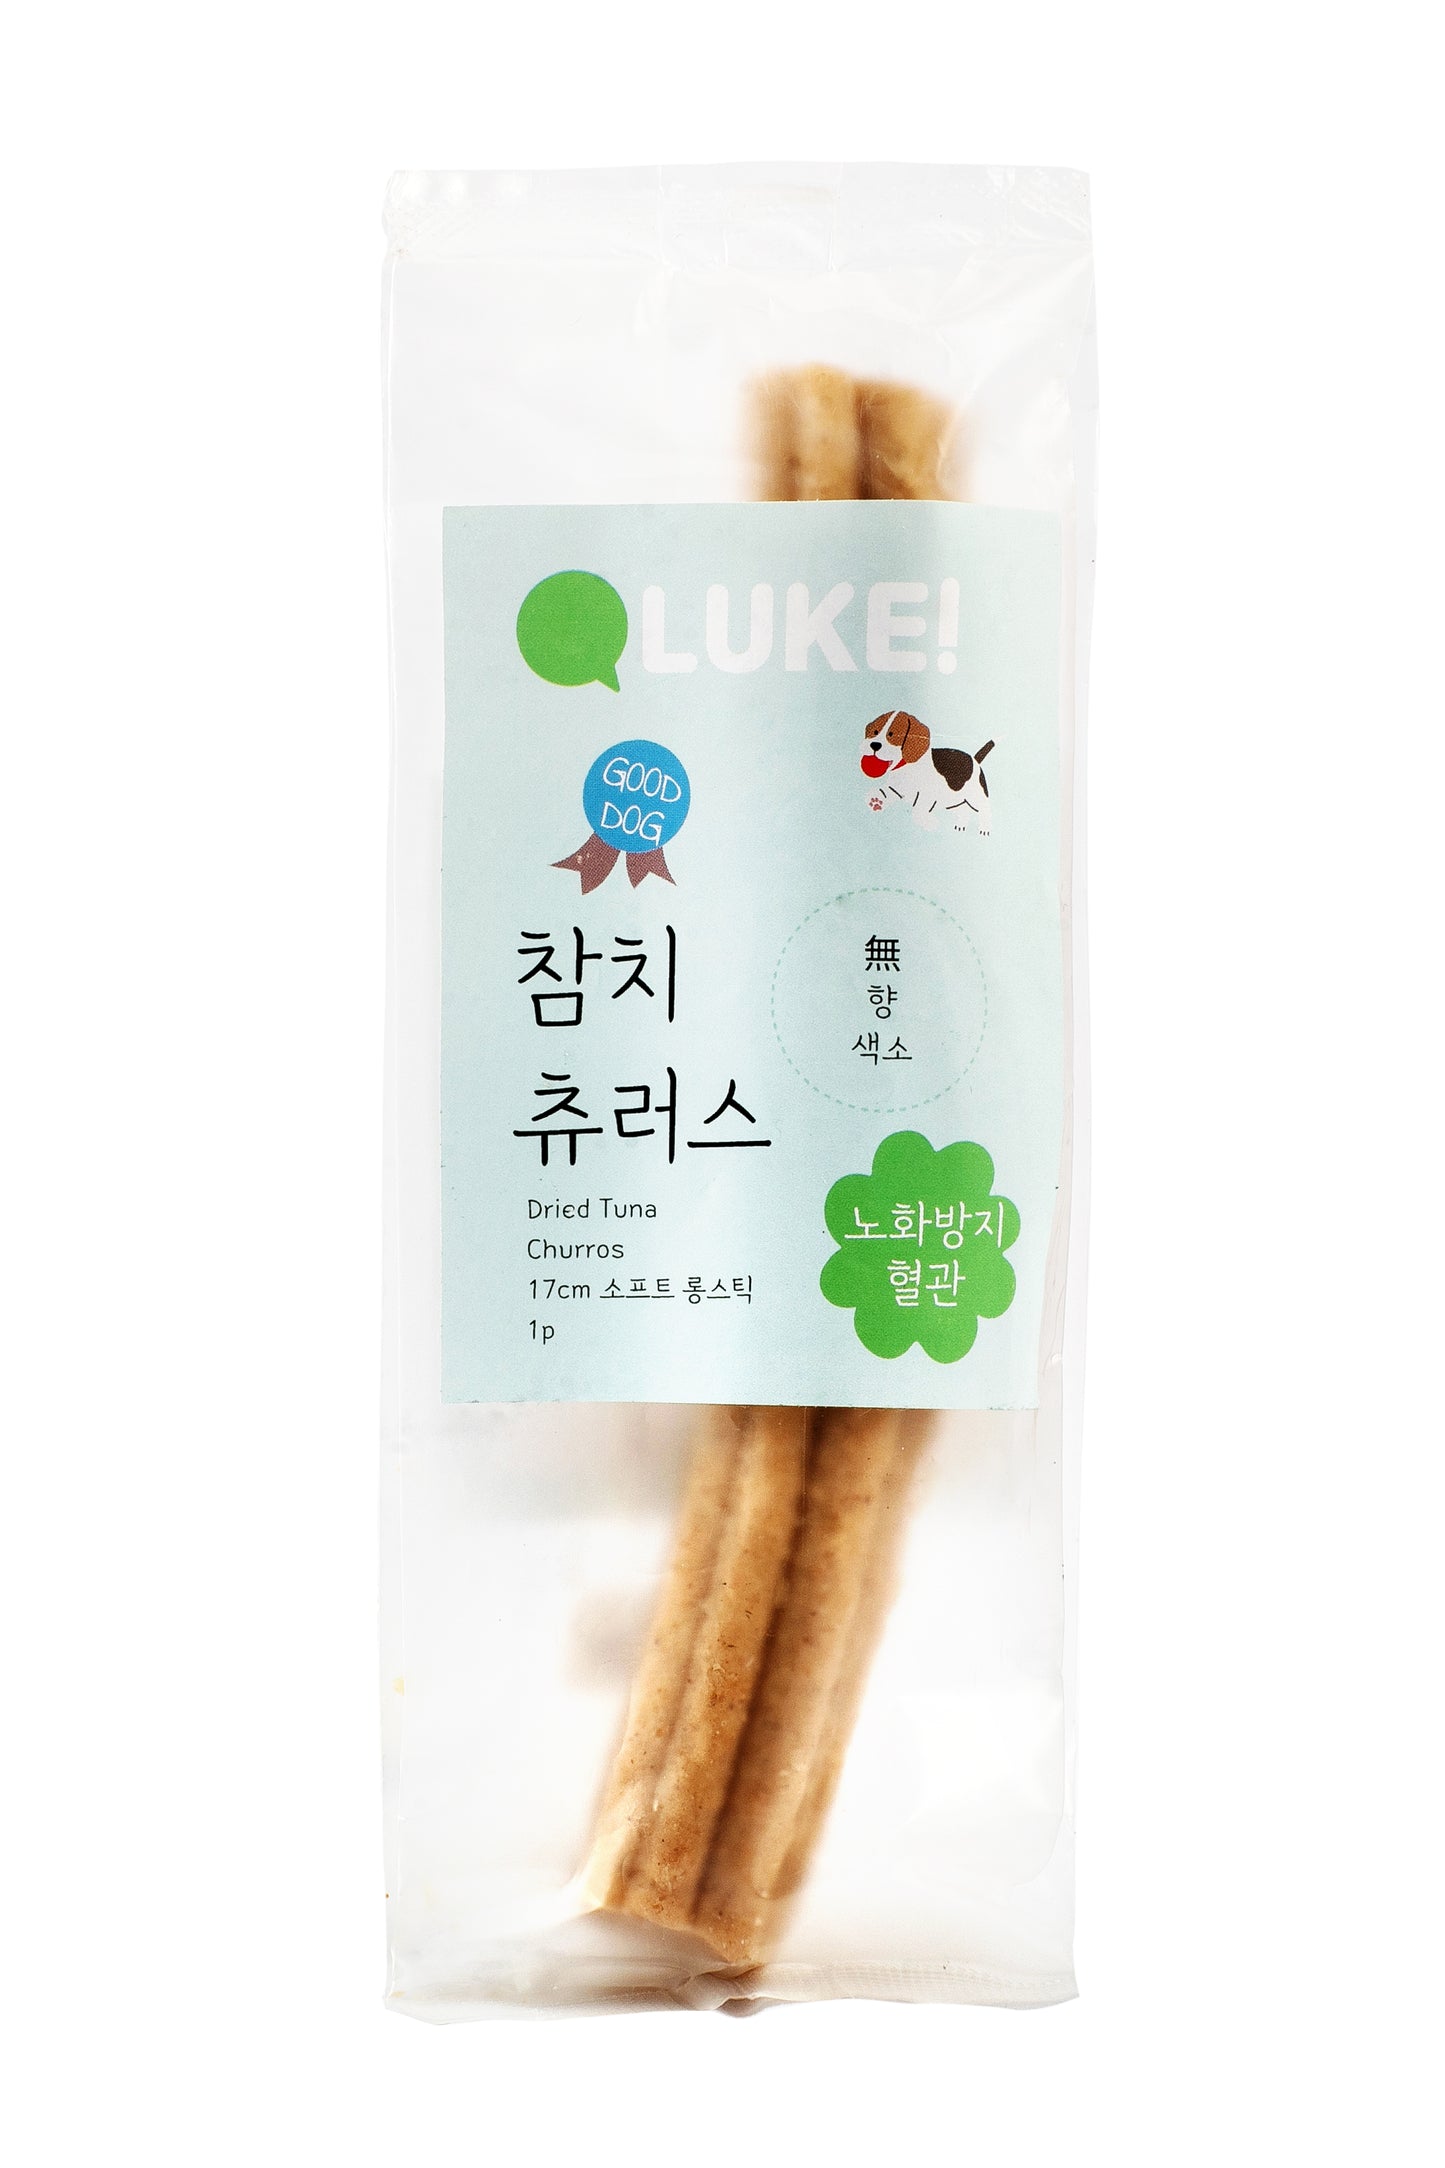 [LUKE] Premium Dried Tuna Sticks - 17cm Soft Stick, 1p with Non-pigmented Anti-Aging Benefits!